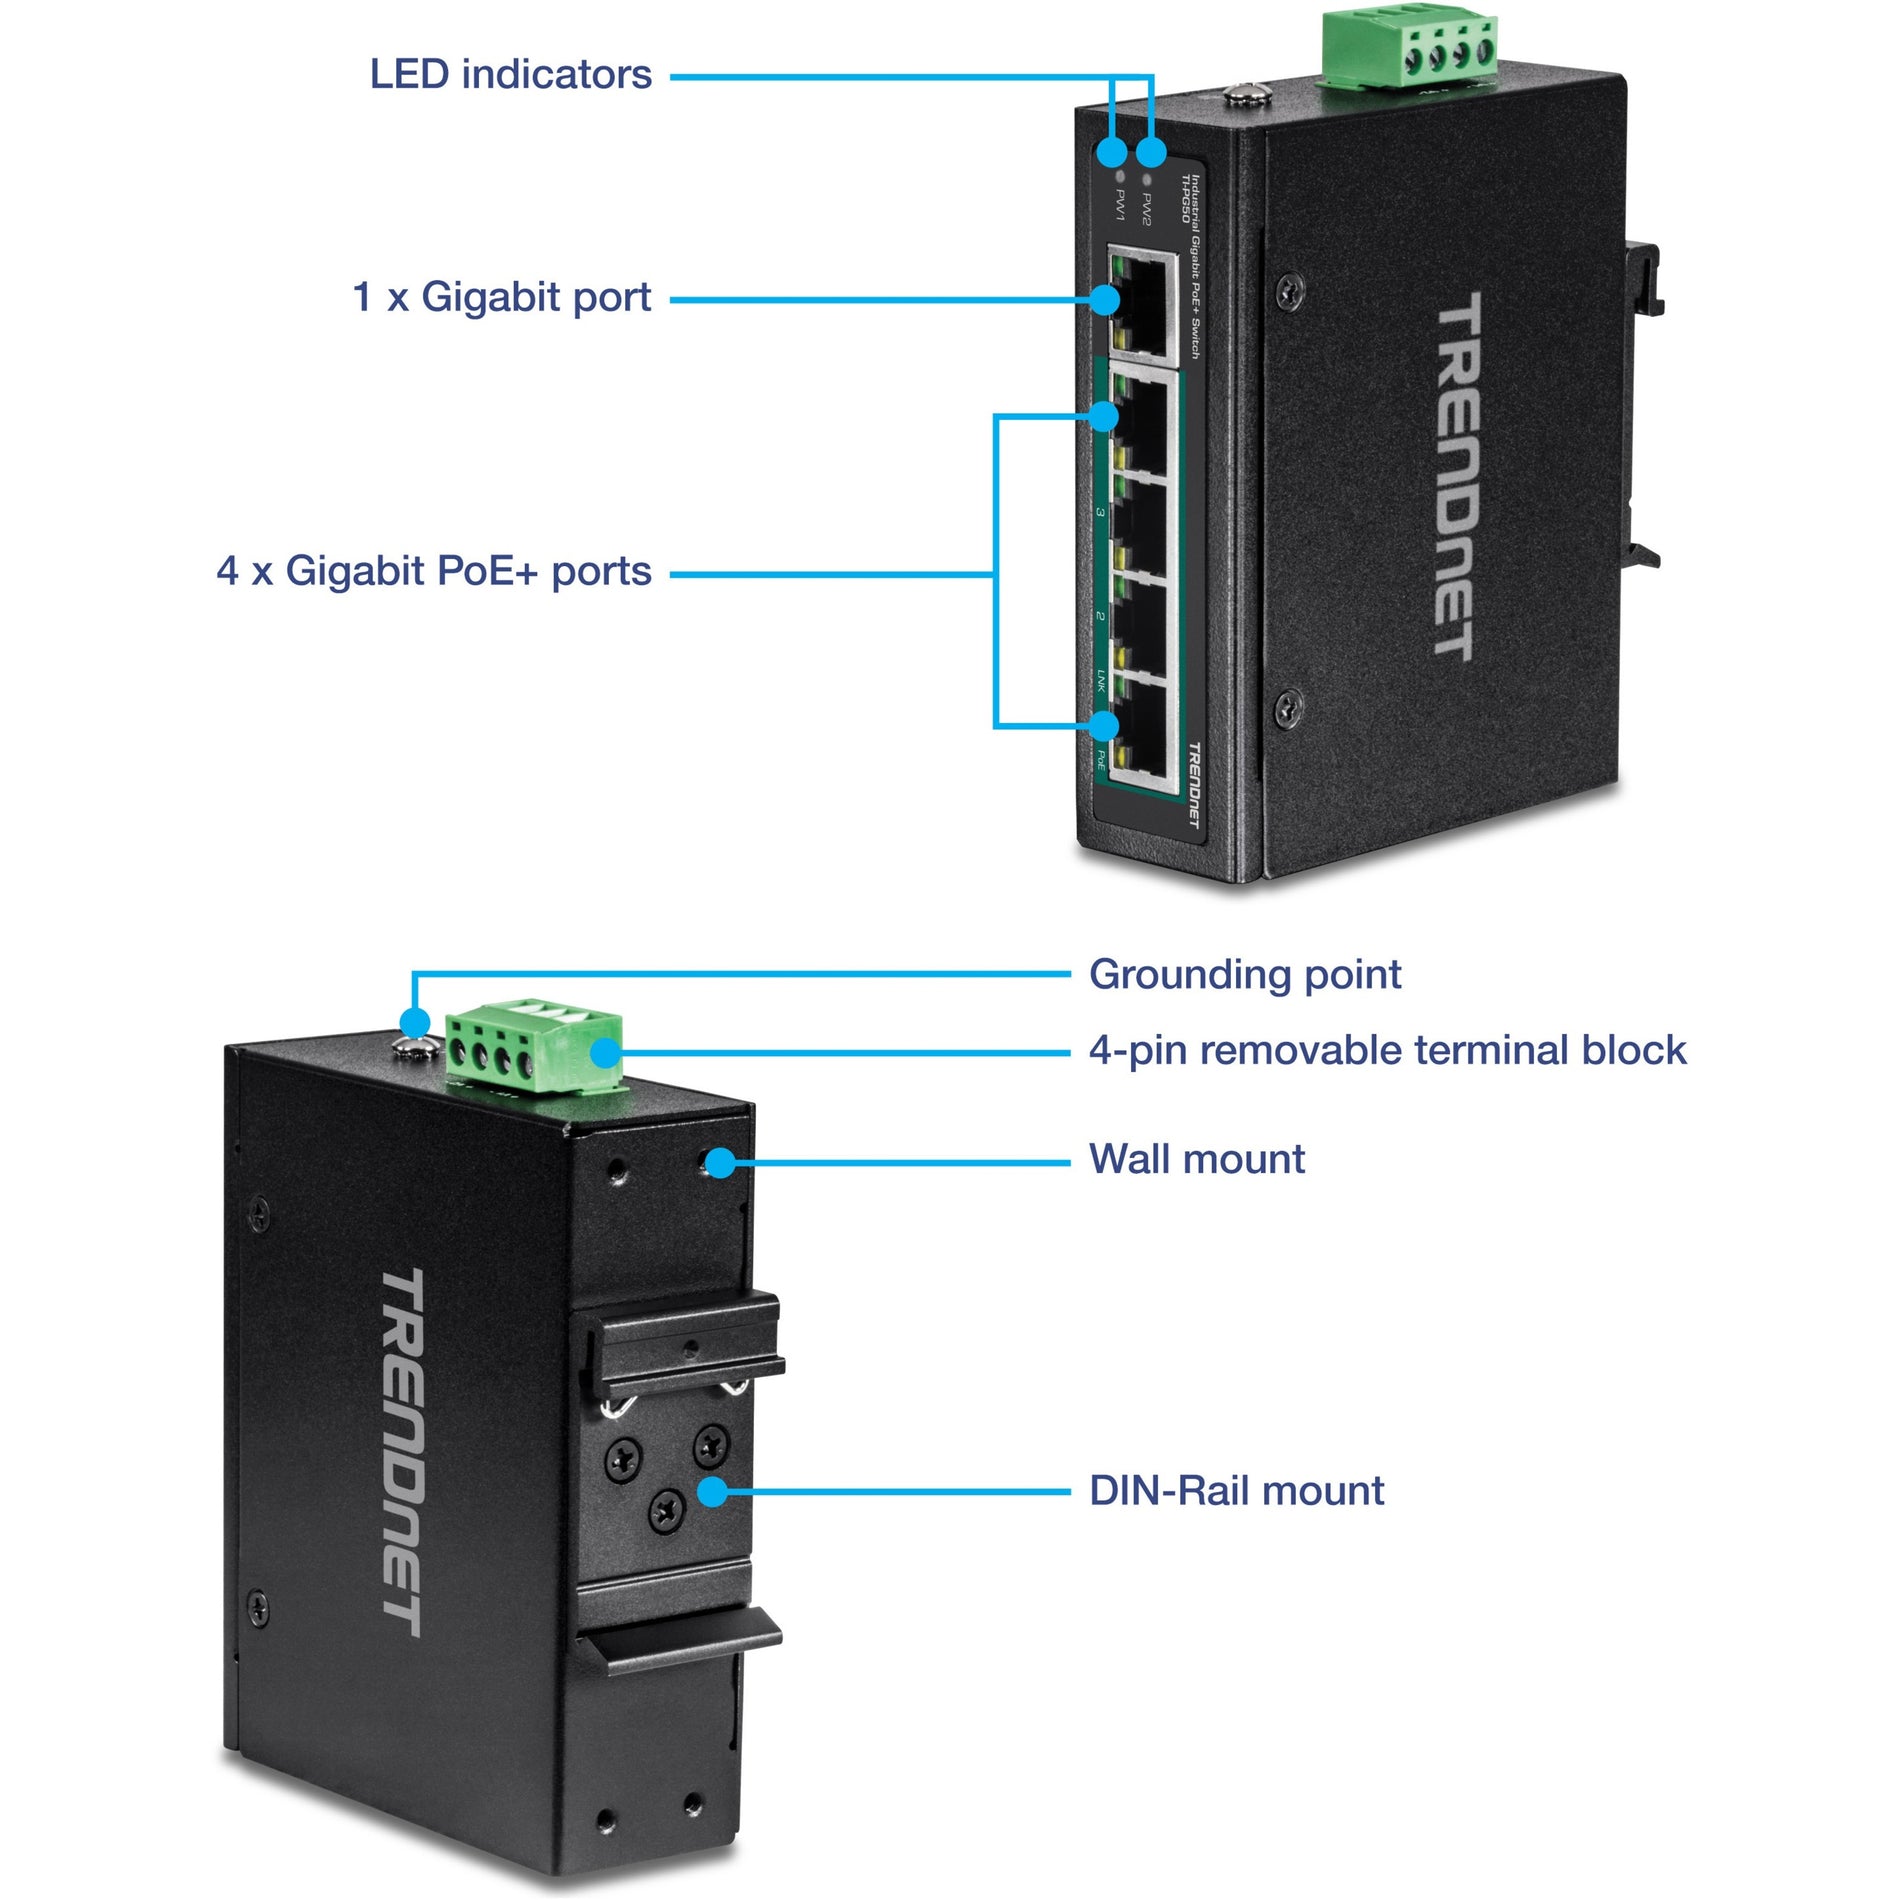 TRENDnet TI-PG50 5-Port Industrial Gigabit PoE + DIN-Rail Switch, Gigabit Ethernet Network Switch